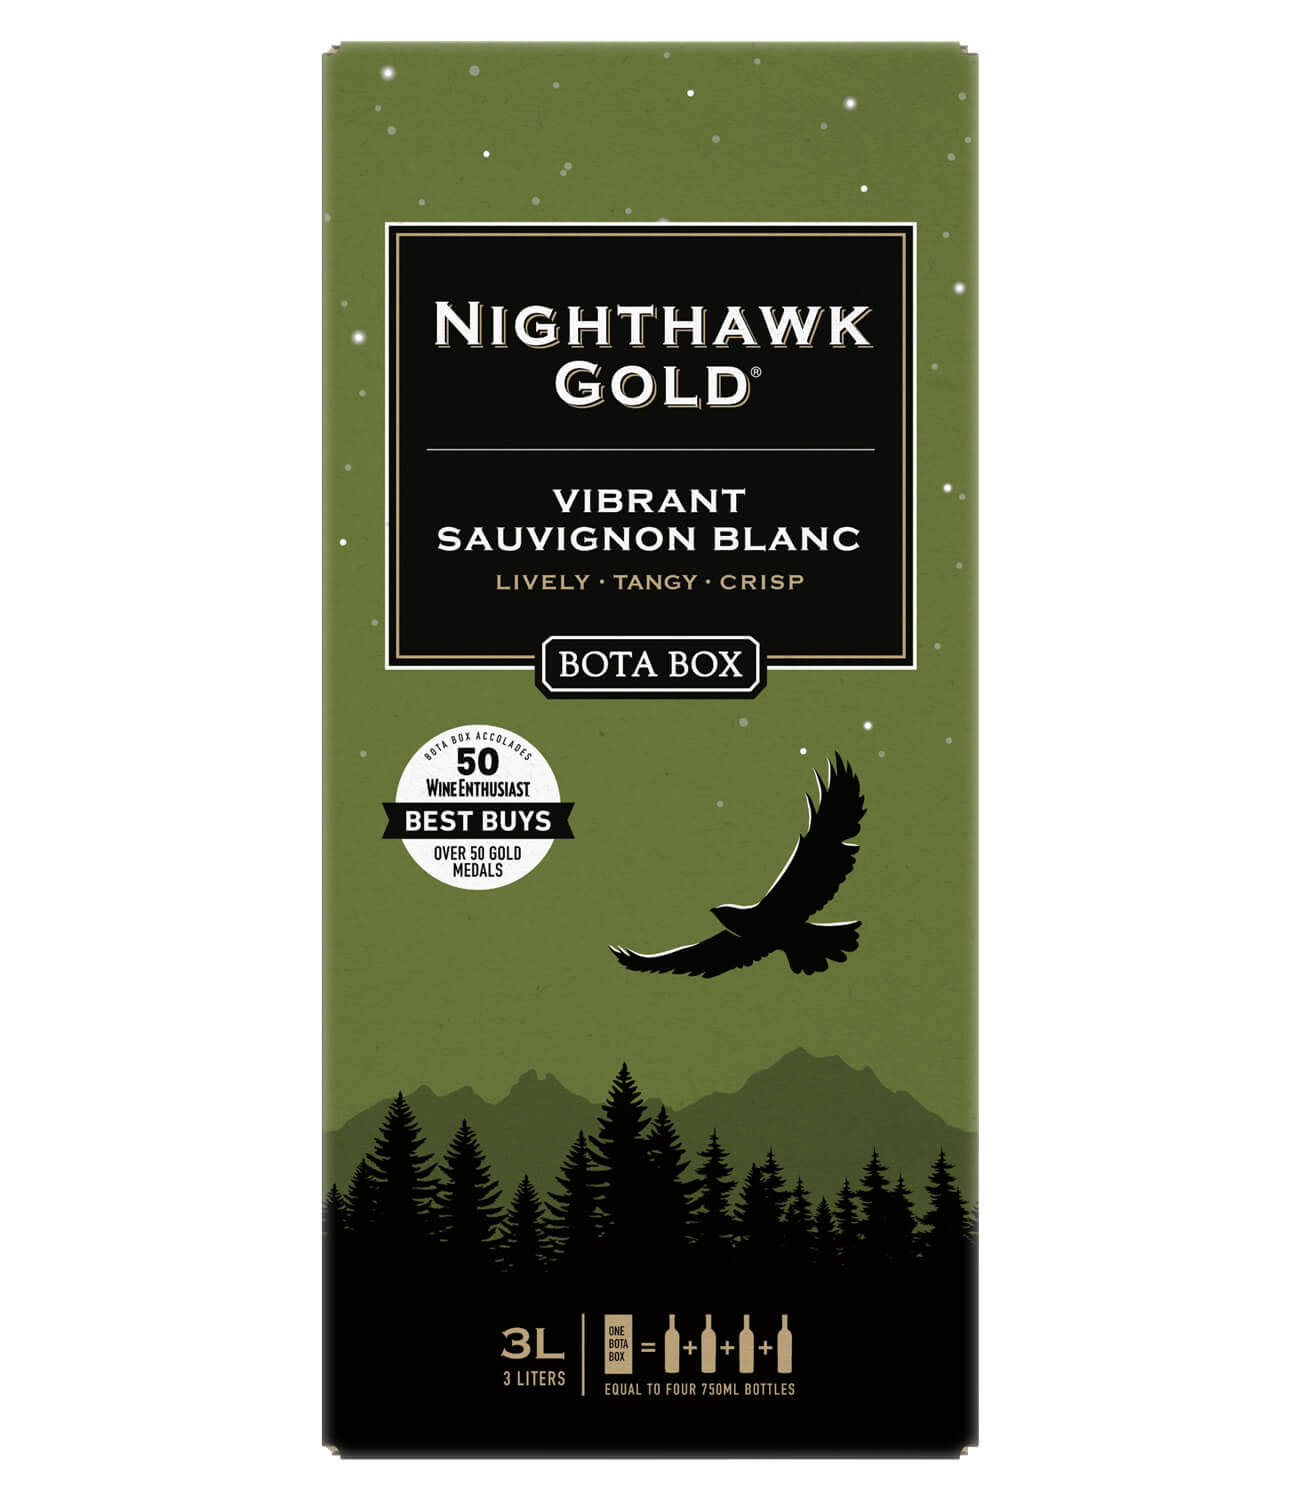 Bota Box Nighthawk Gold Sauvignon Blanc, Vibrant - 3 liters